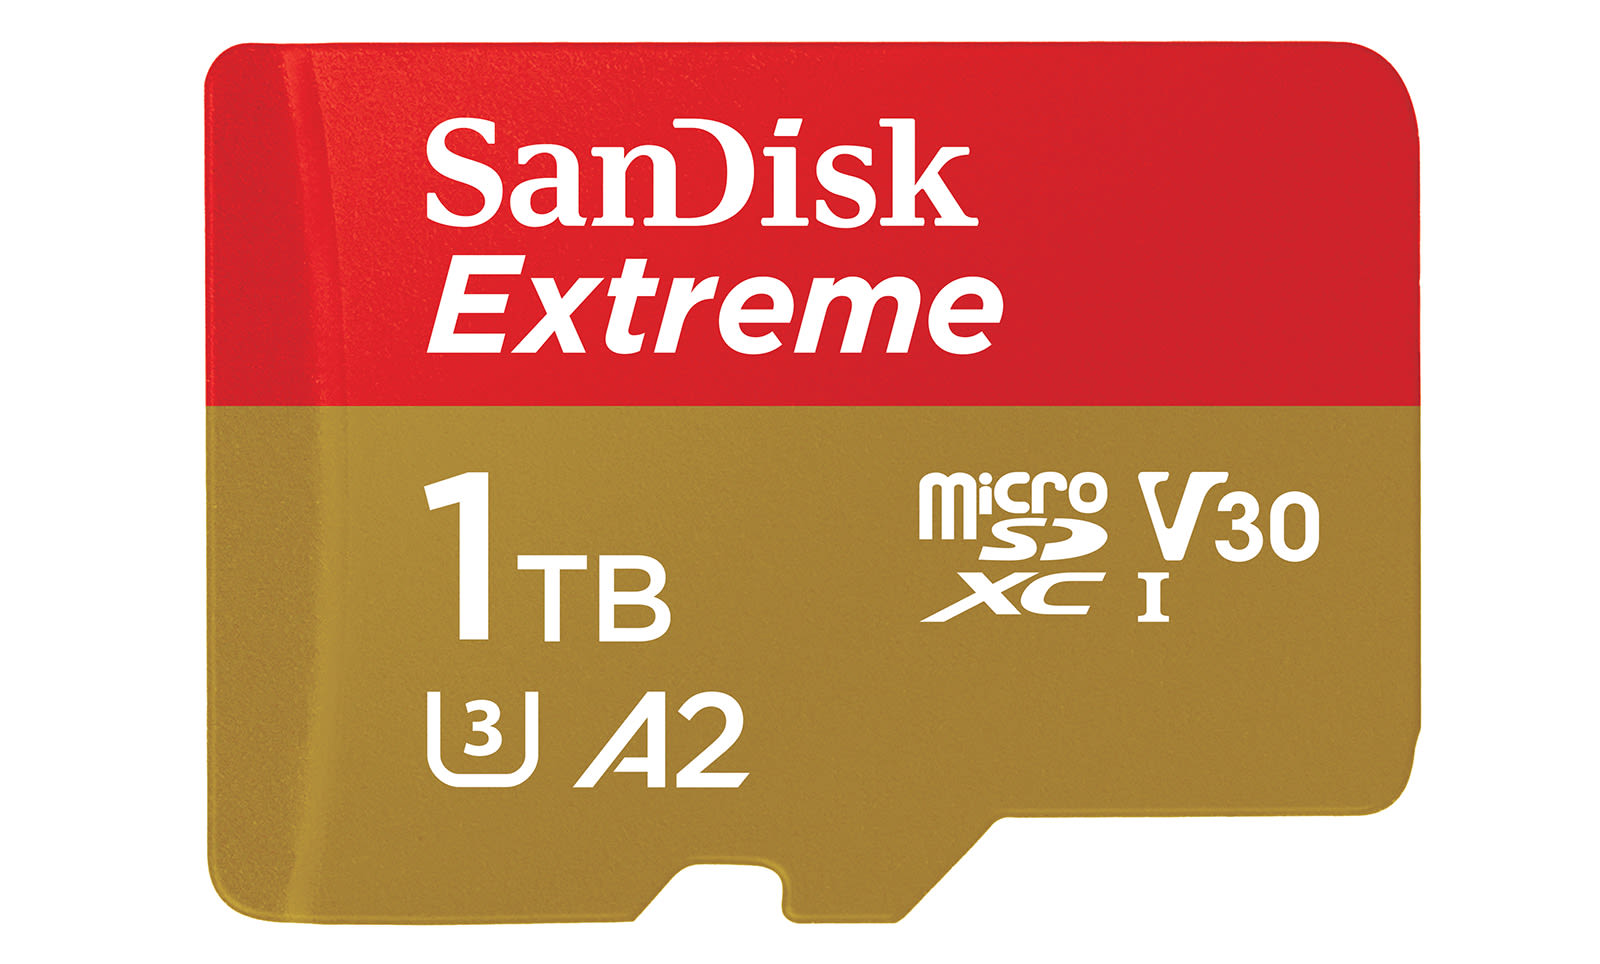 1TB microSD cards